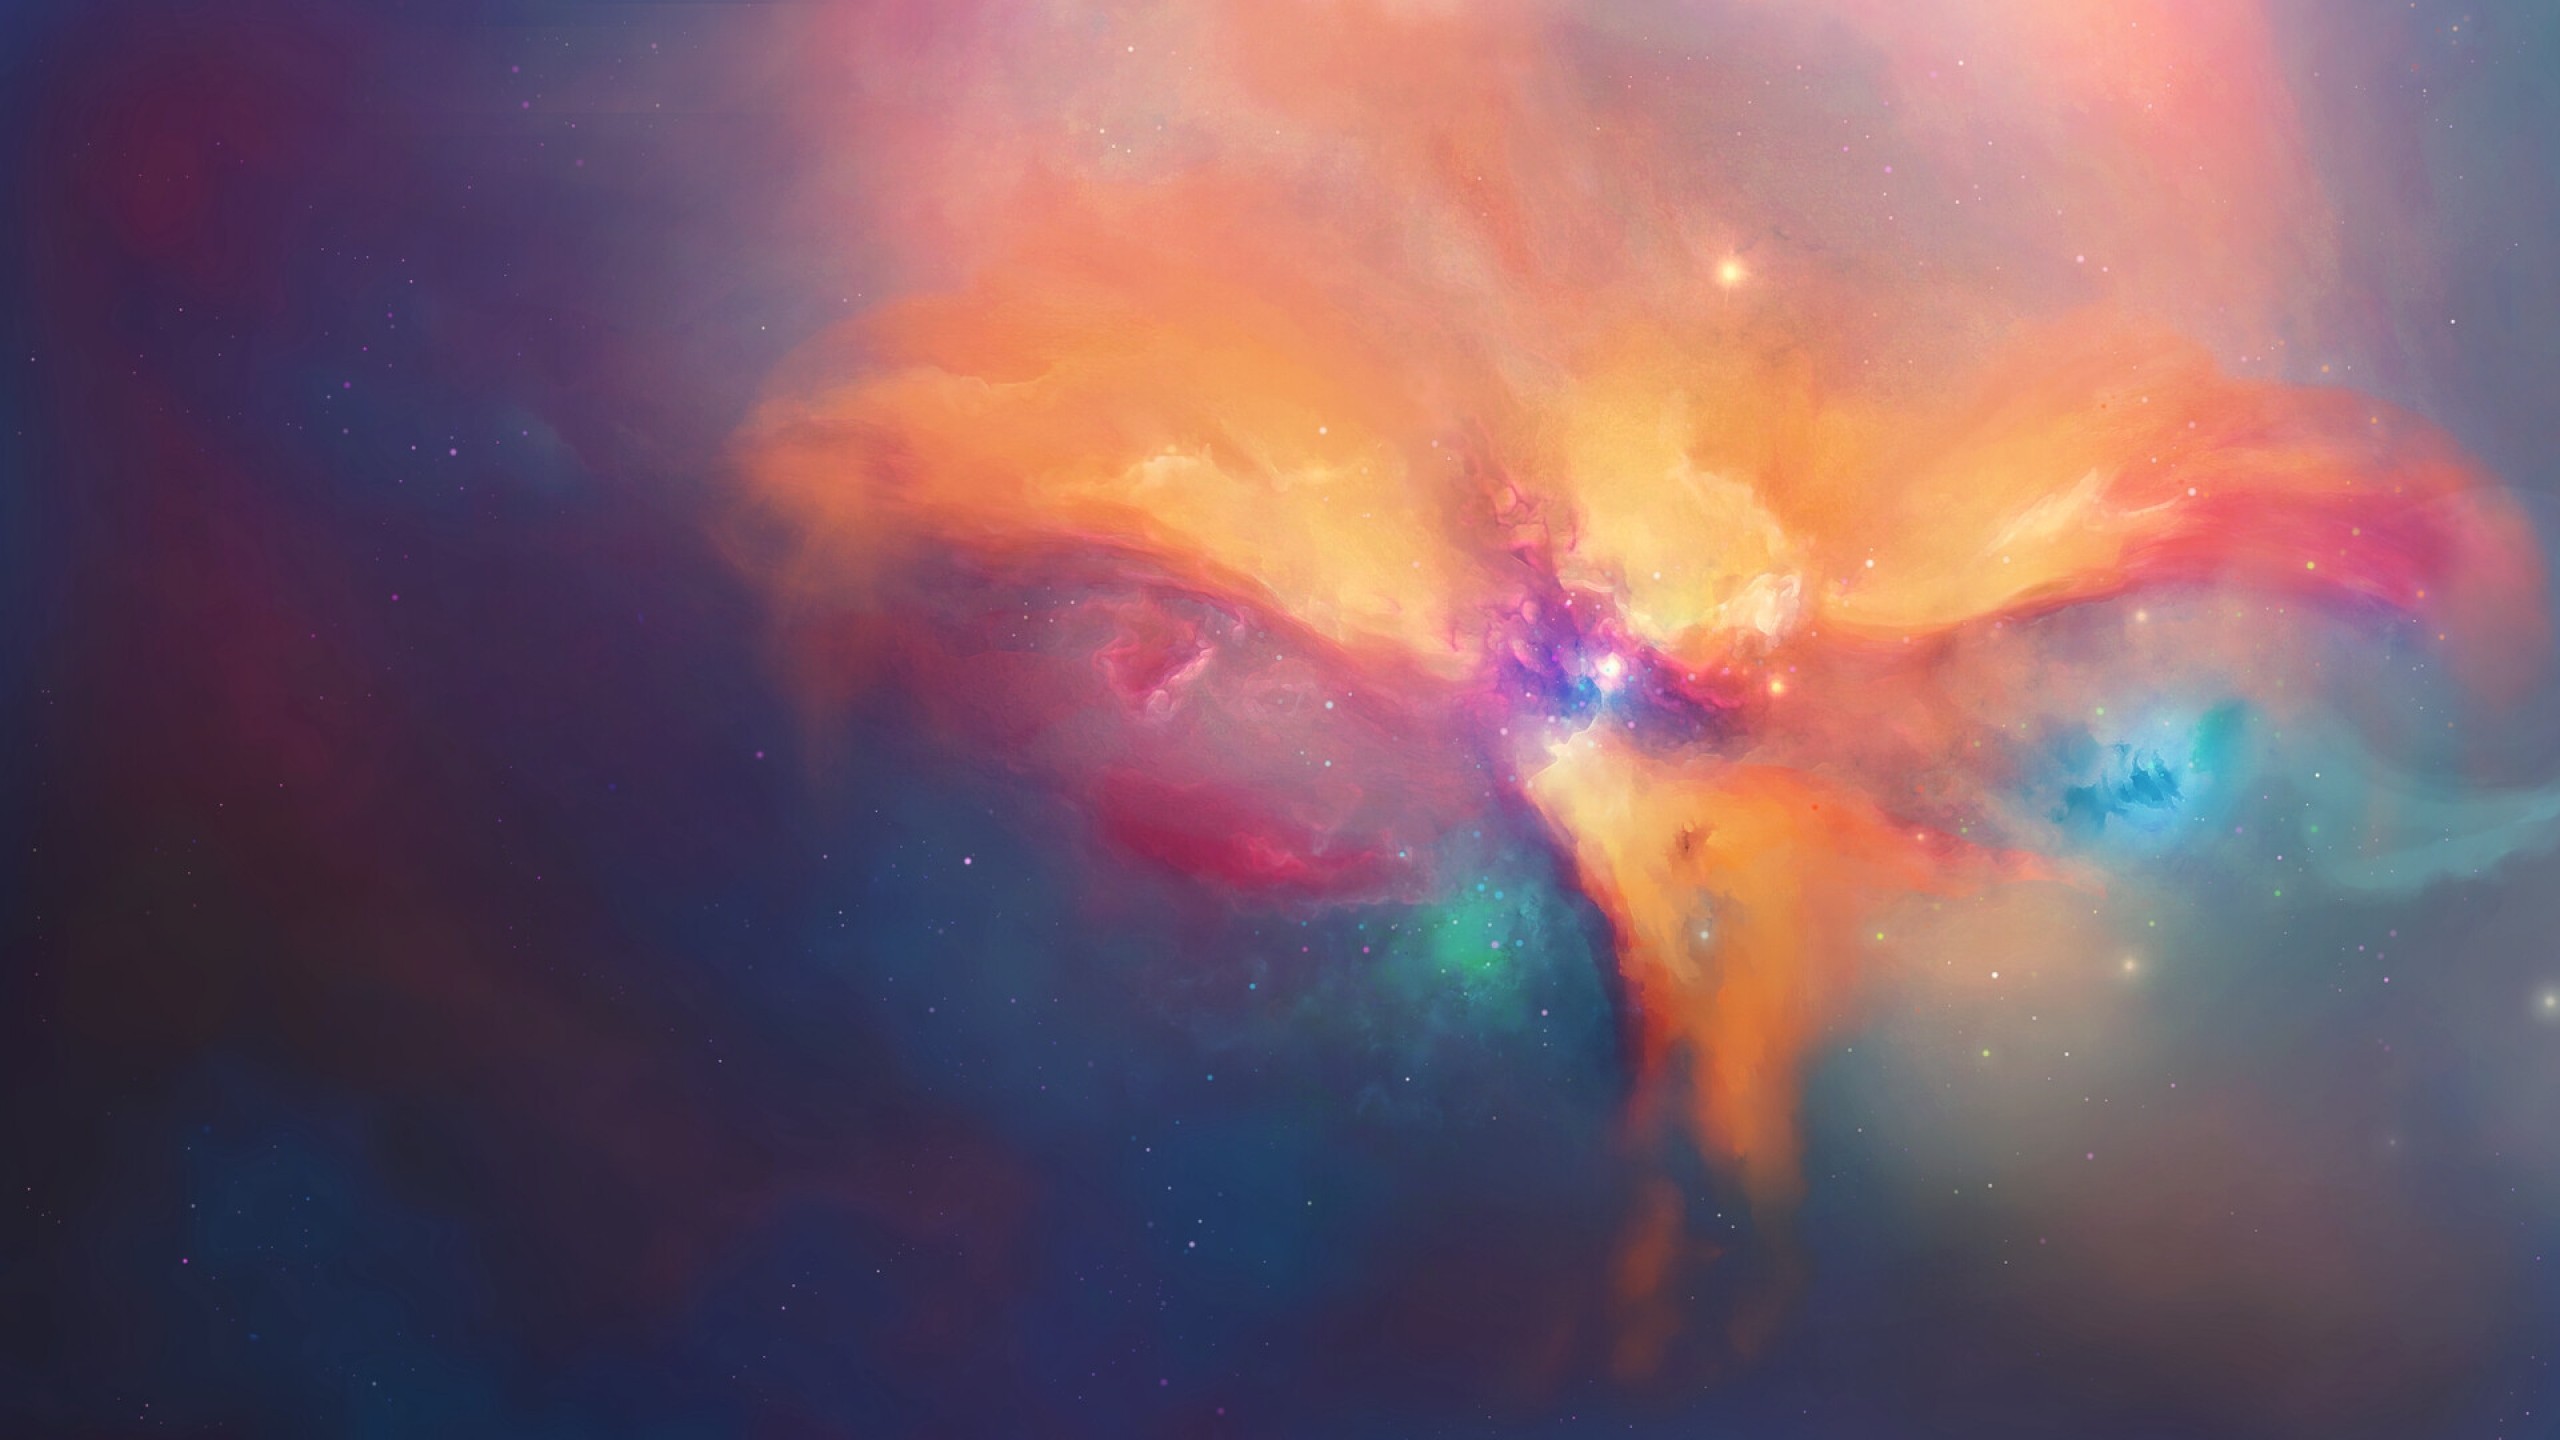 Colorful Nebula, Galaxy, Shiny Stars - Cosmos 4k - HD Wallpaper 